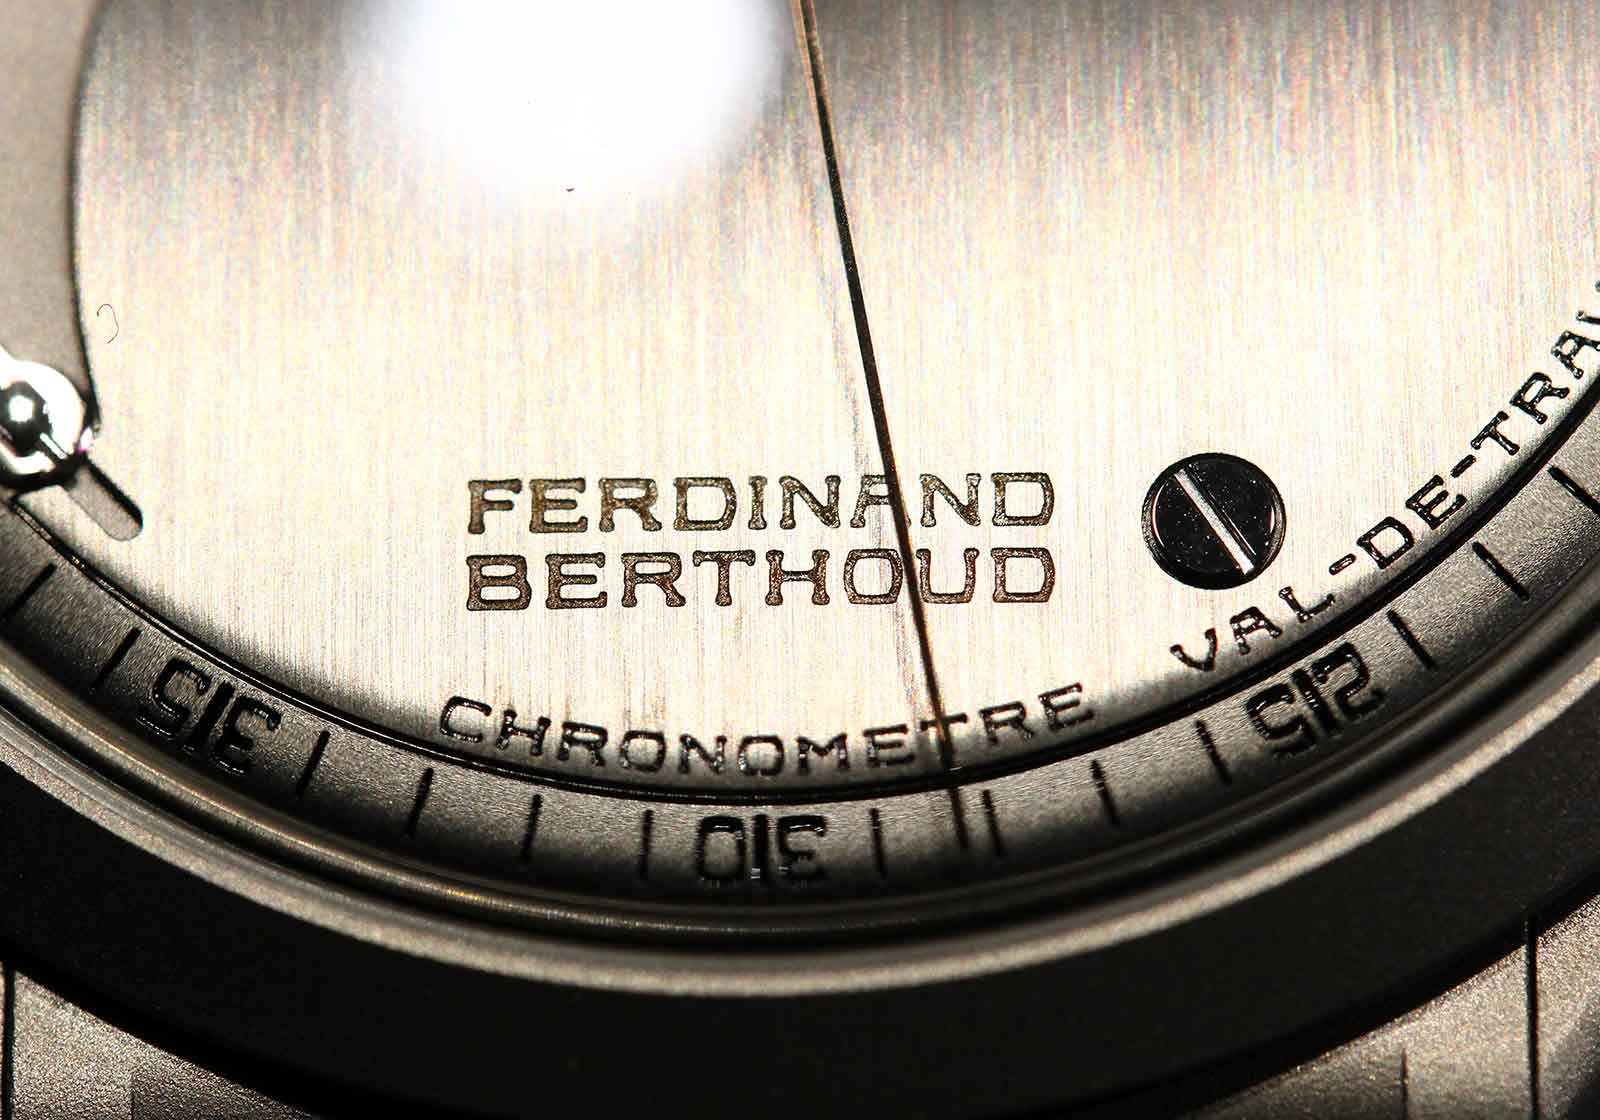 1001 variations of Ferdinand Berthoud